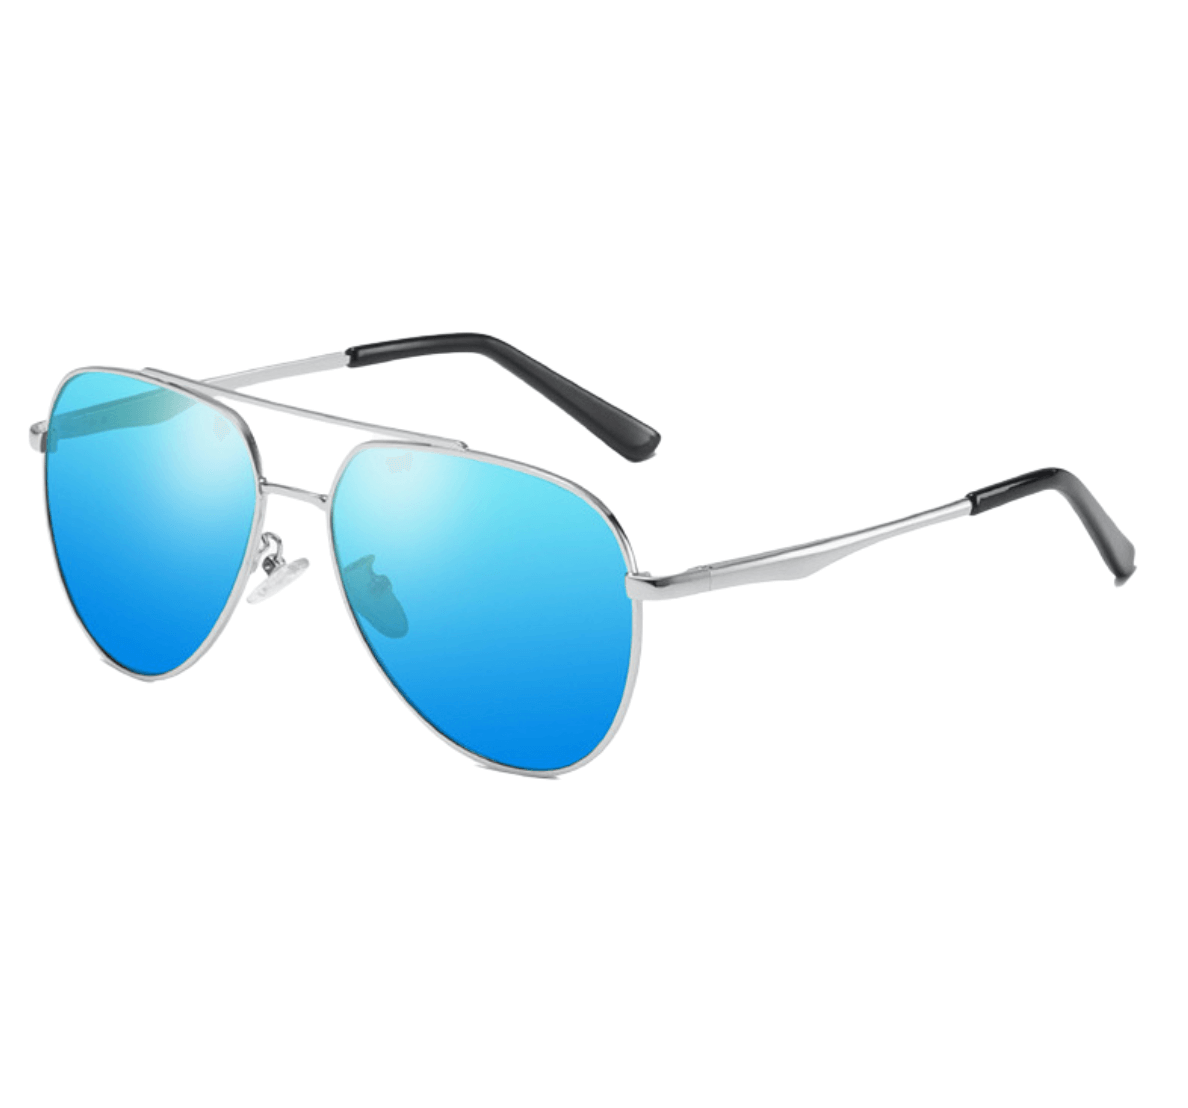 Wholesale Blue Aviator Sunglasses Cheap, blue lens aviator sunglasses, sunglasses factory in China, wholesale sunglasses